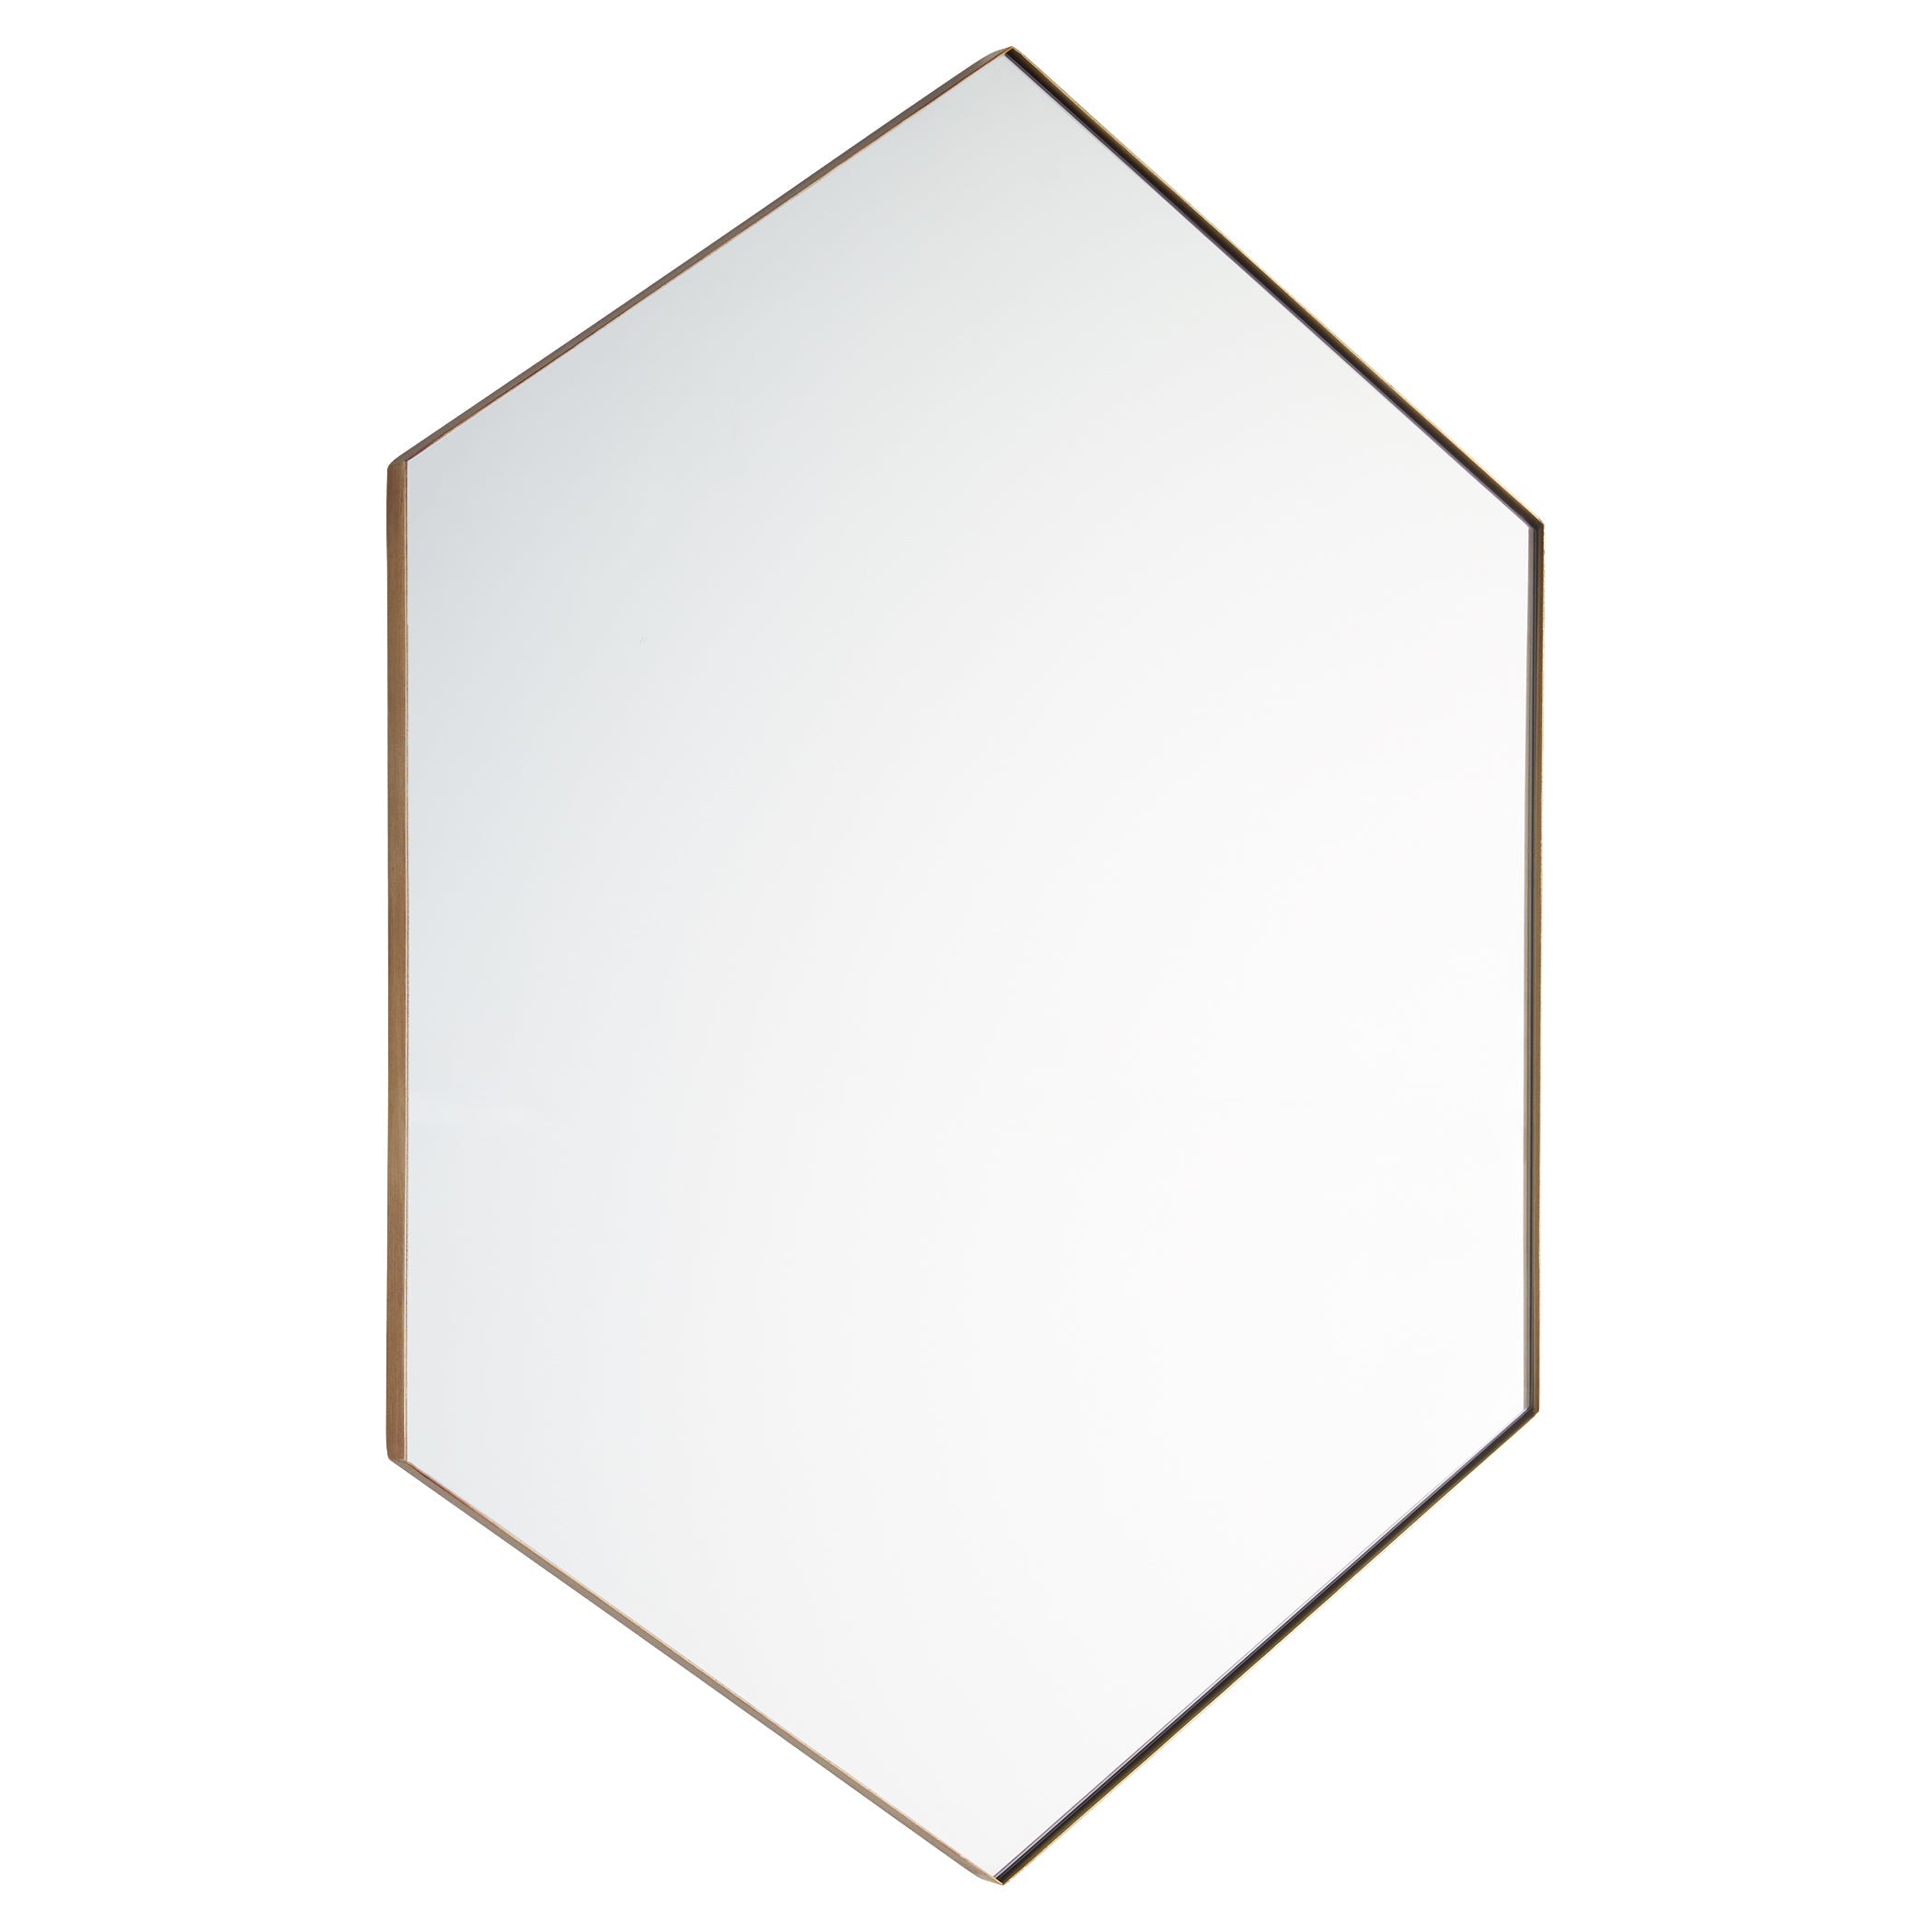 Quorum 13-2840-21 Mirror - Gold Finished